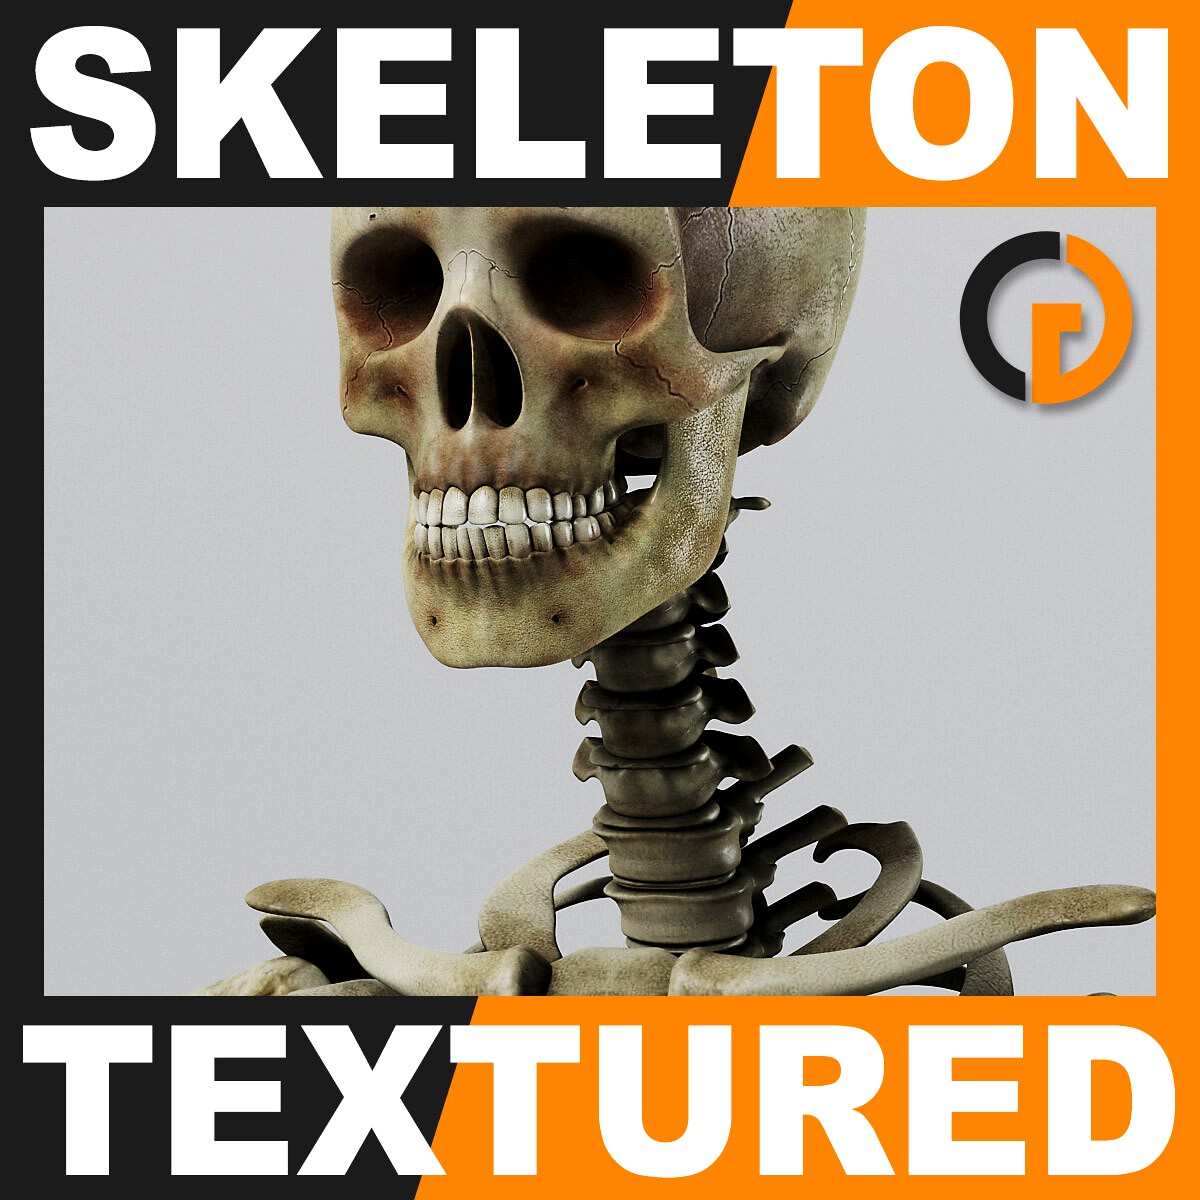 Human Textured Skeleton - Anatomy